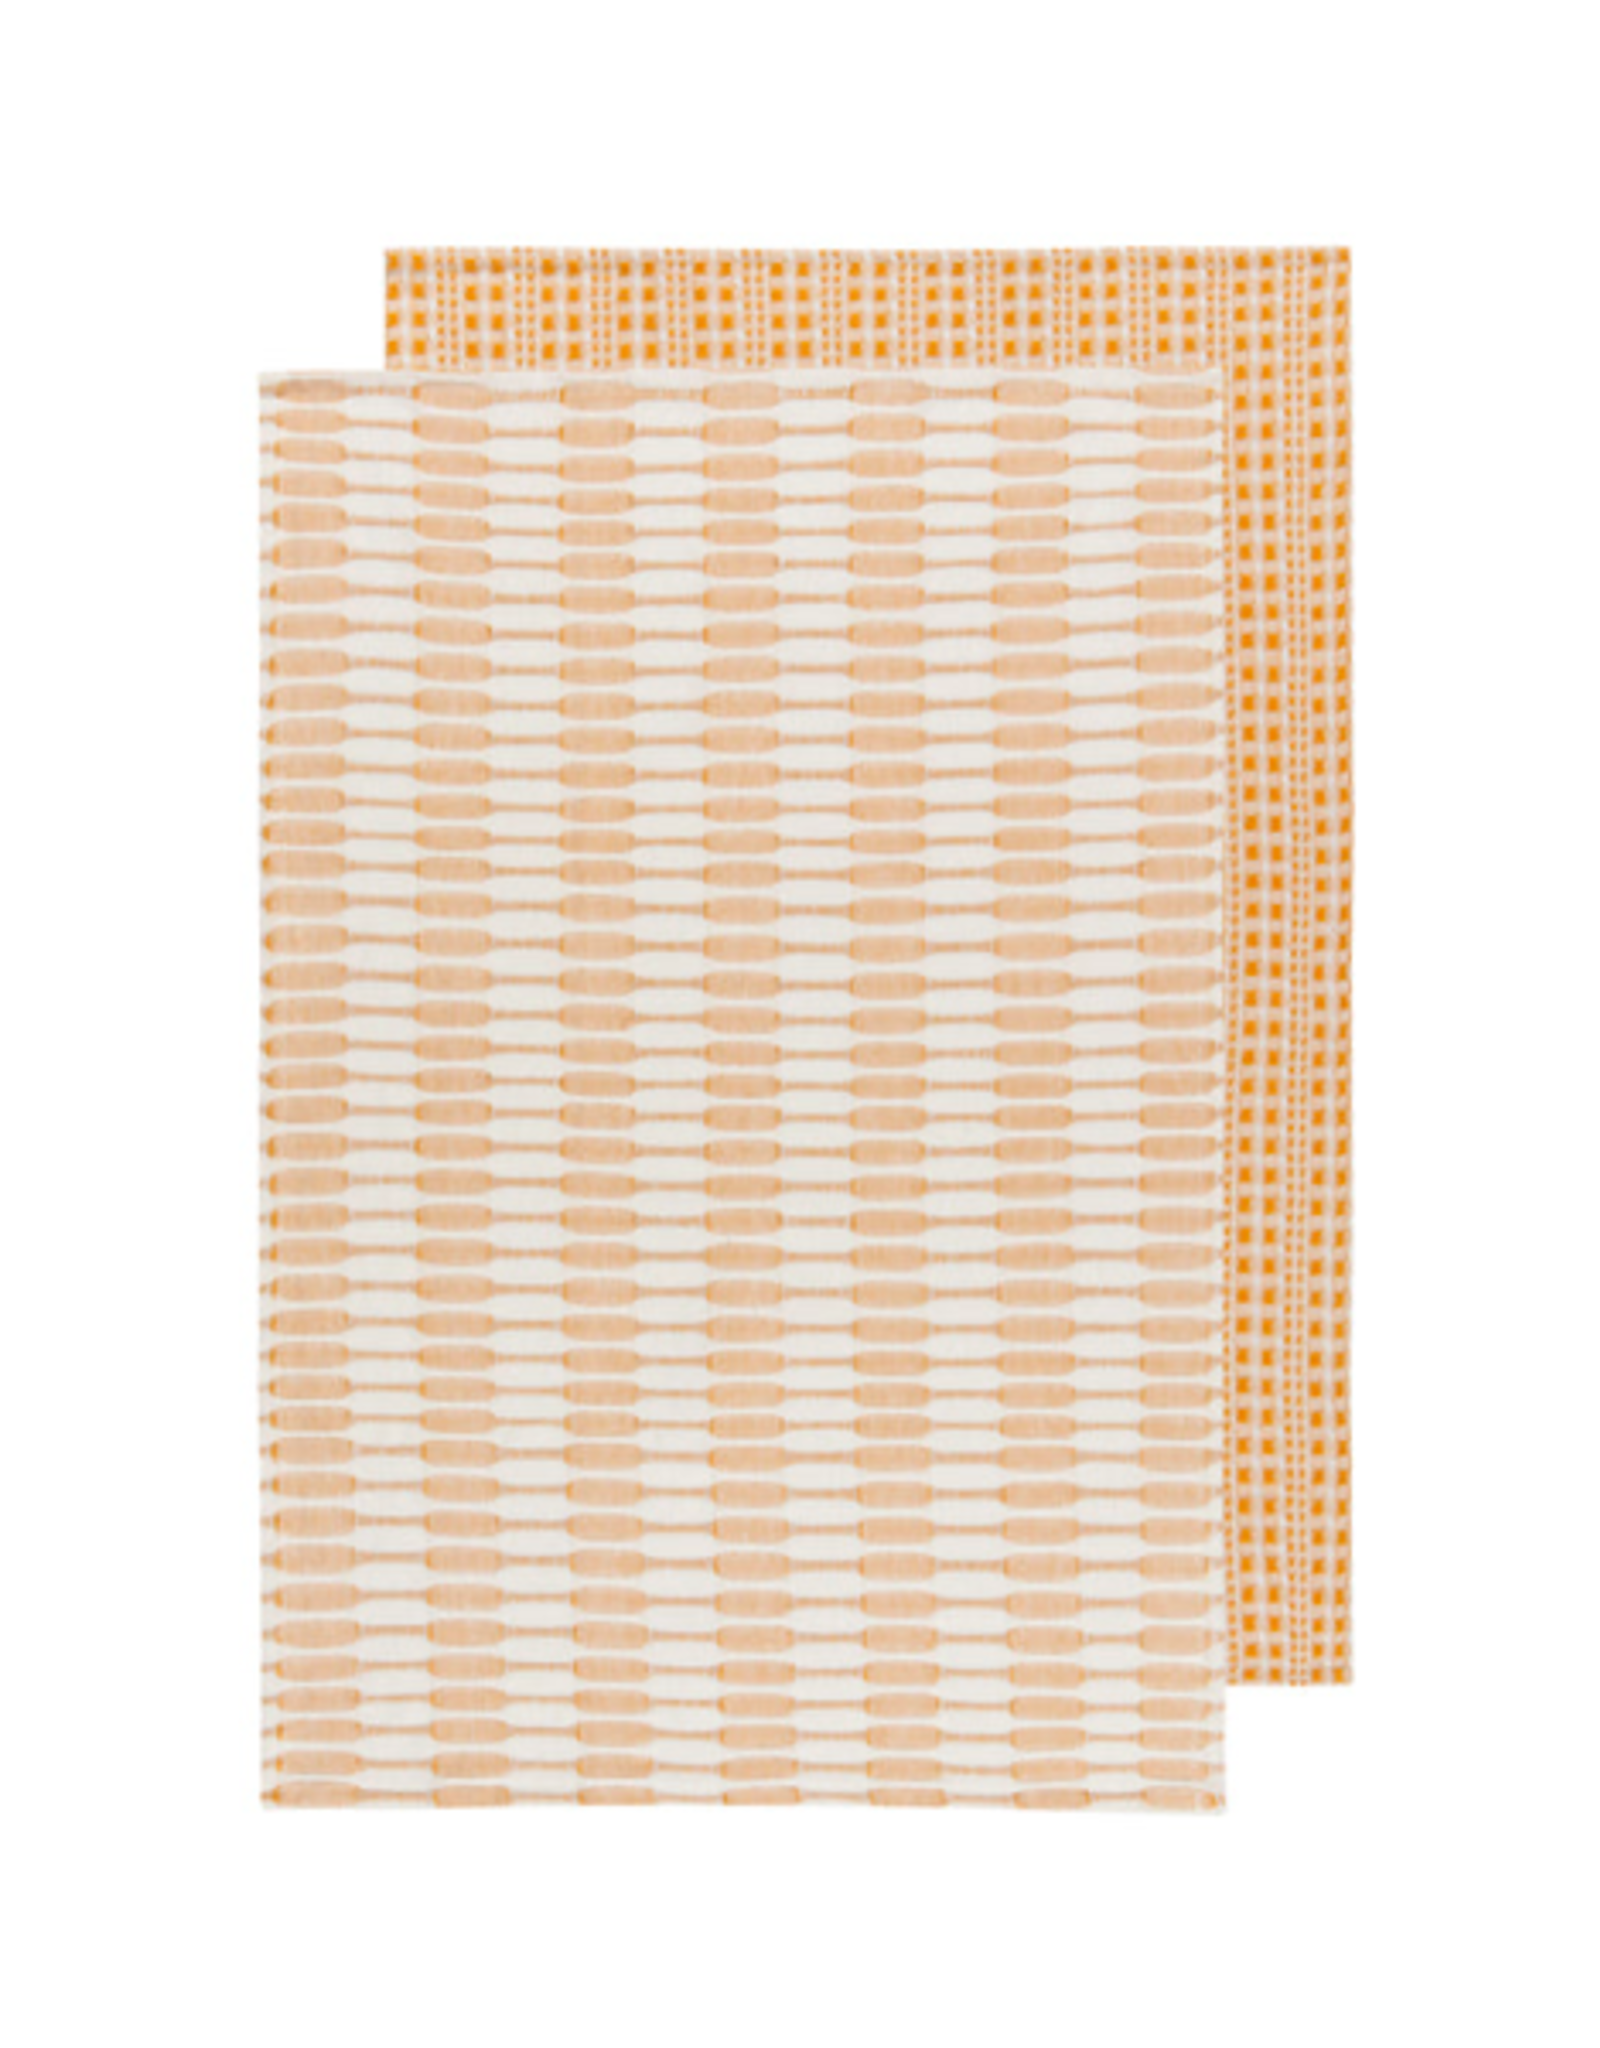 DCA - Tea Towel / Set of 2, Honeycomb, Golden